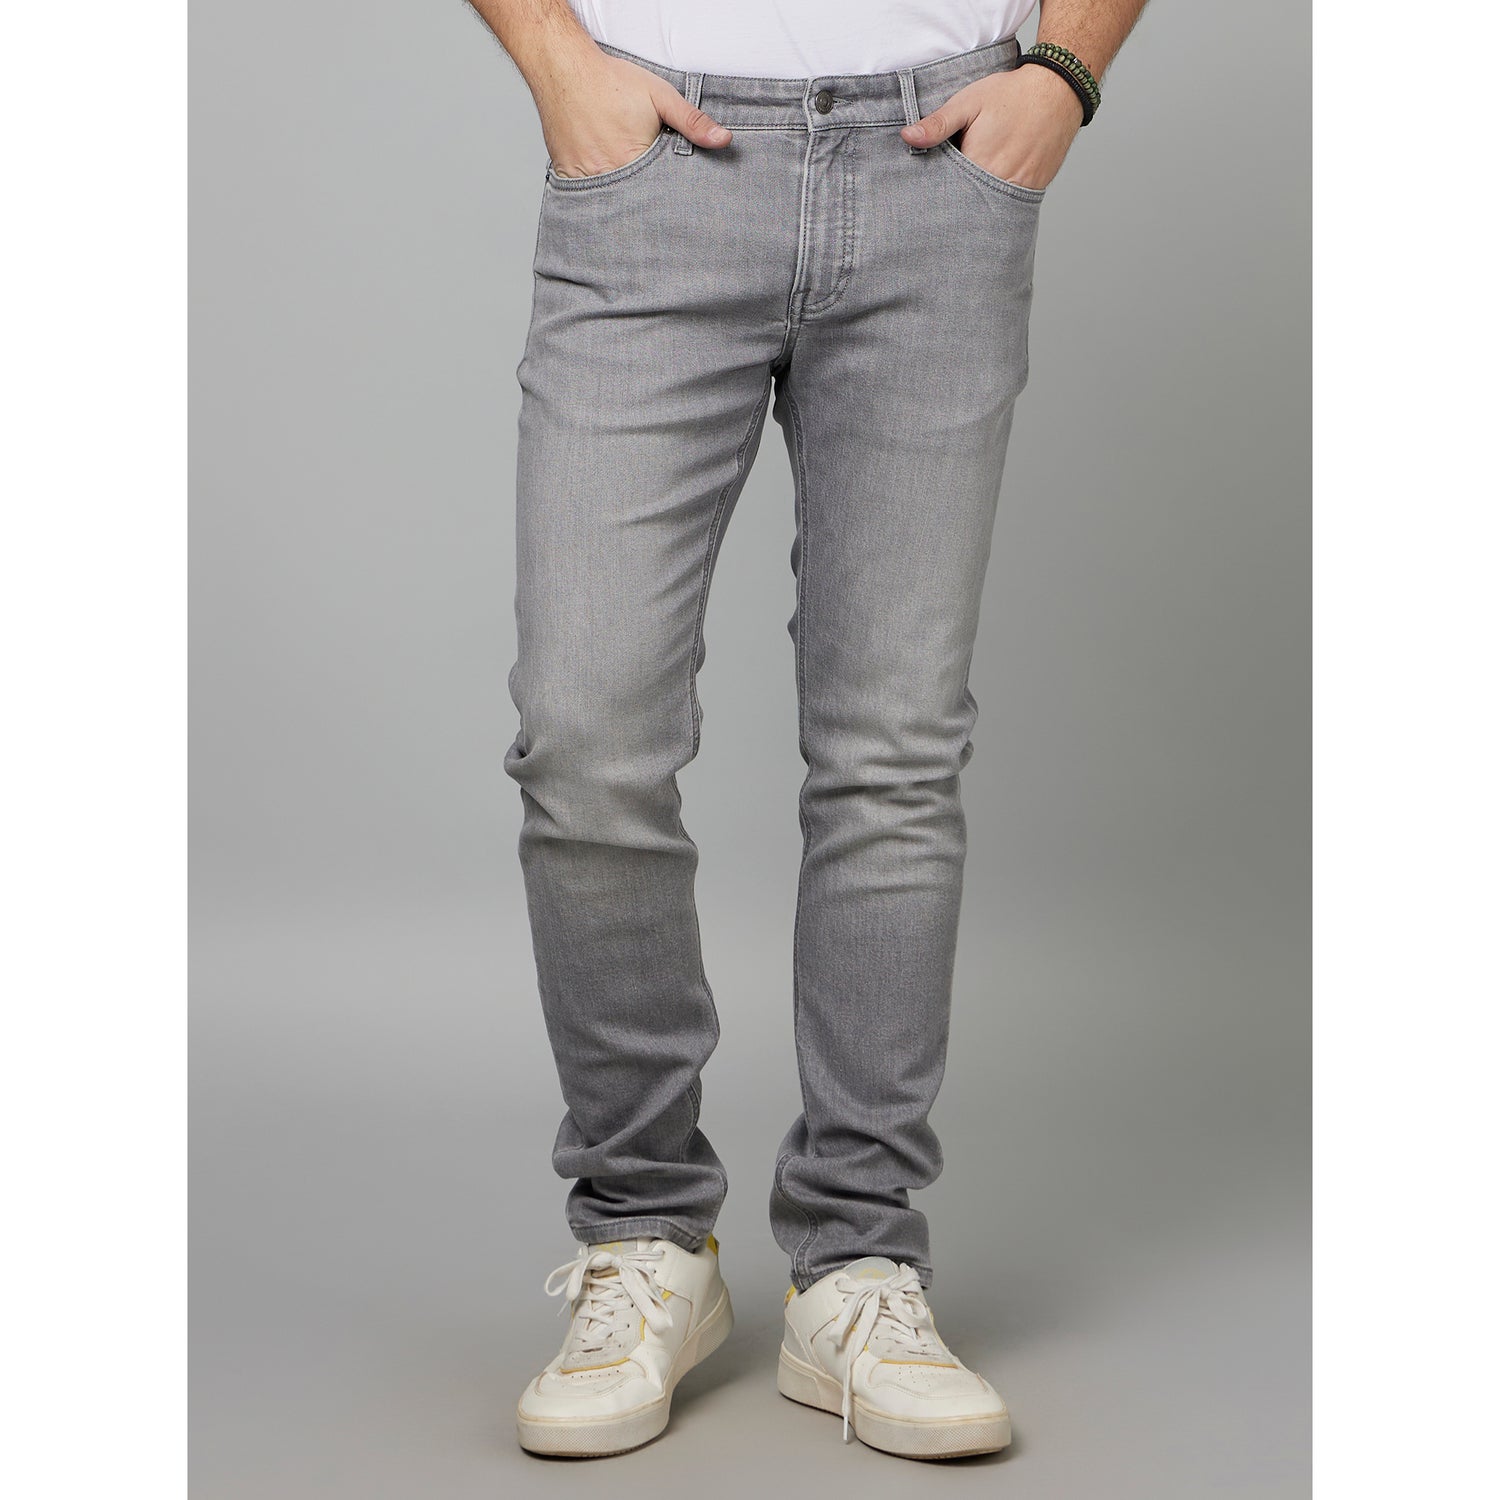 Grey Slim Fit Clean Look Jeans (FOKREYIN25)